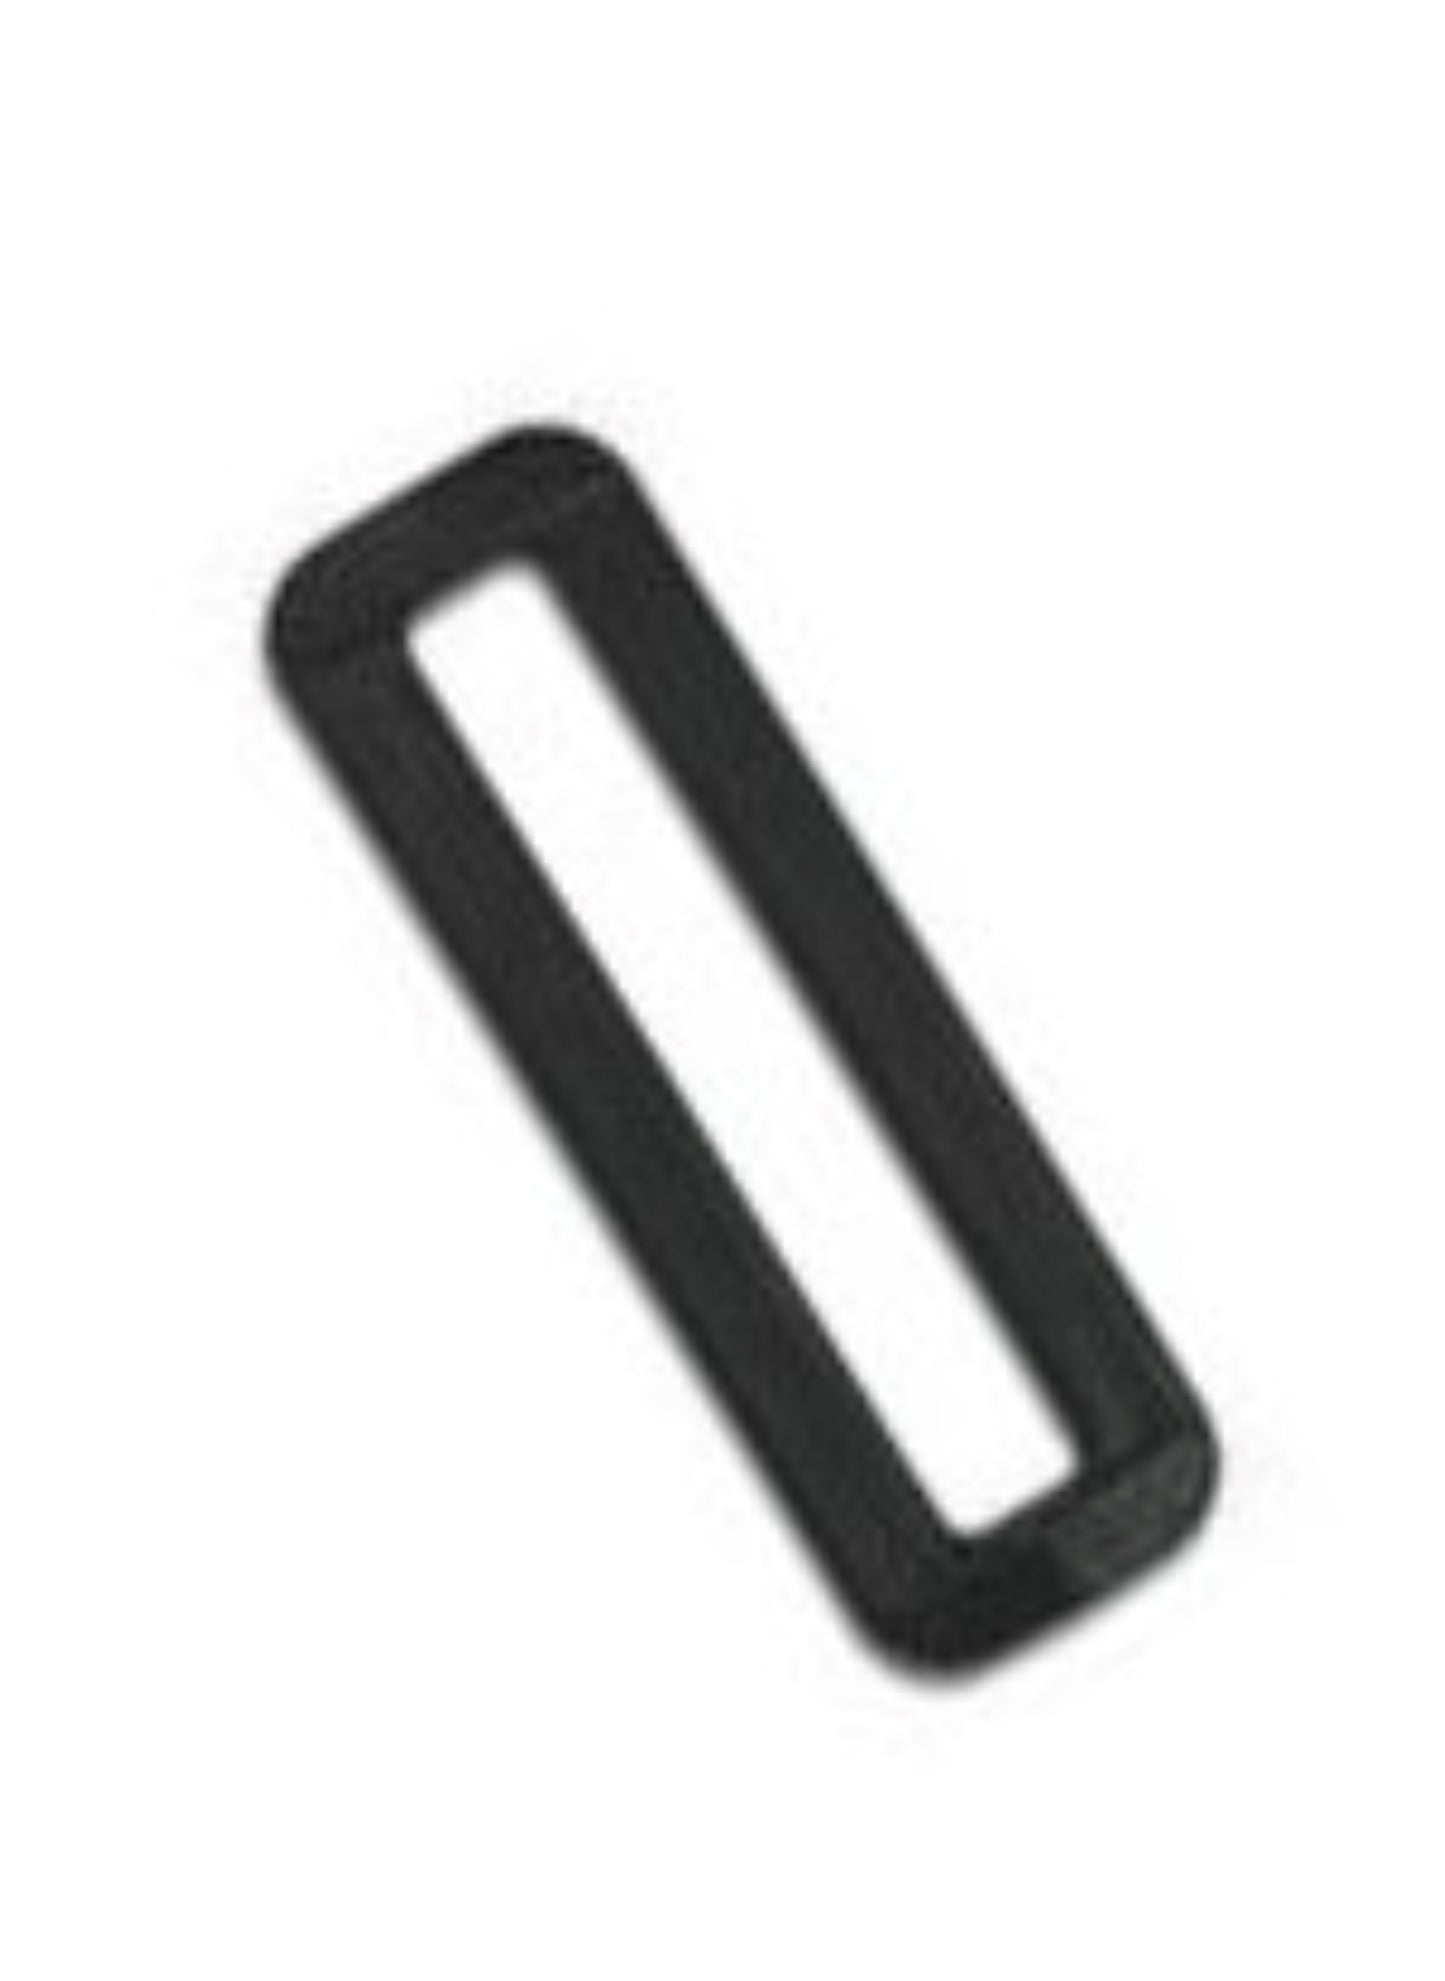 1.5" Heavy Duty Rectangle Plastic Loop Slide Ring Bar - Durable Webbing Slide Loop for Bags, Straps, and Various Packs